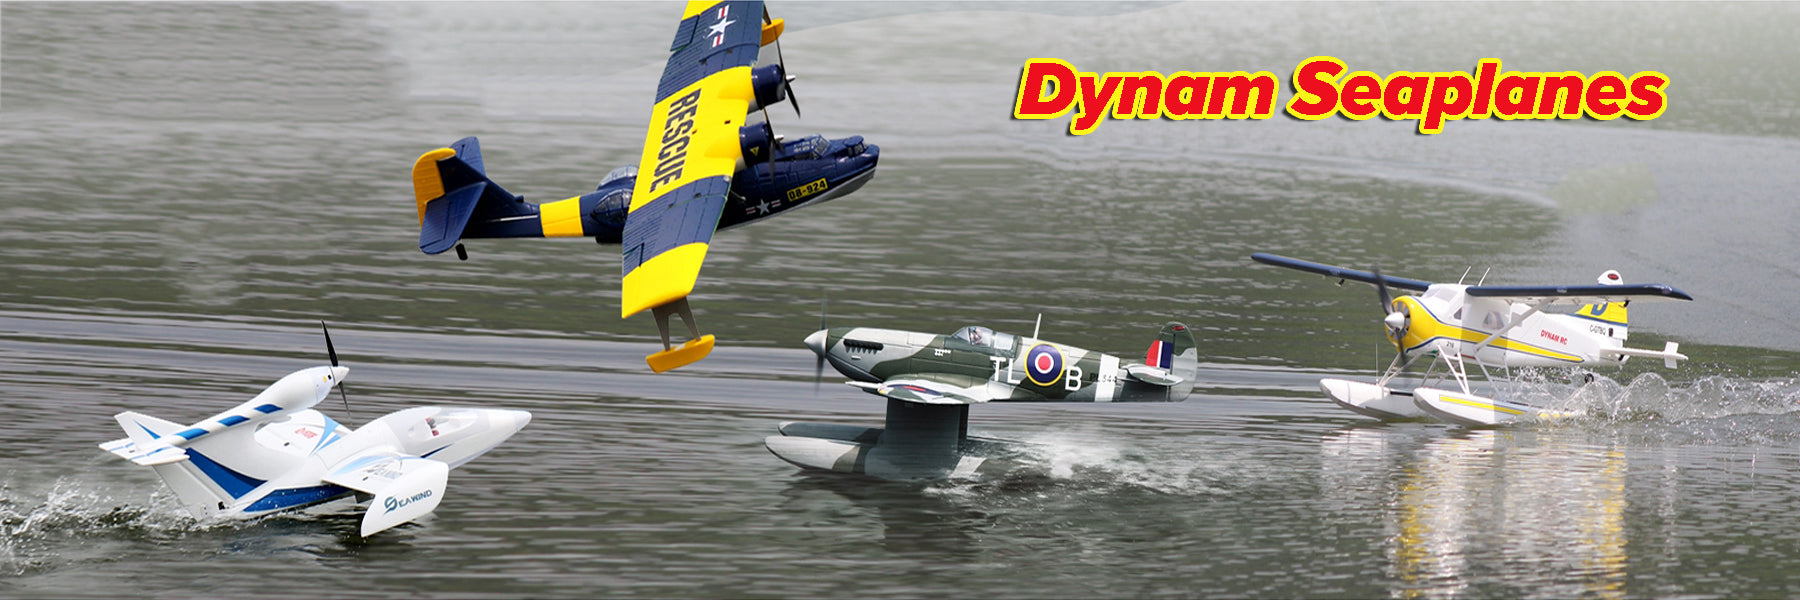 Dynam-RC-Seaplanes-Banner